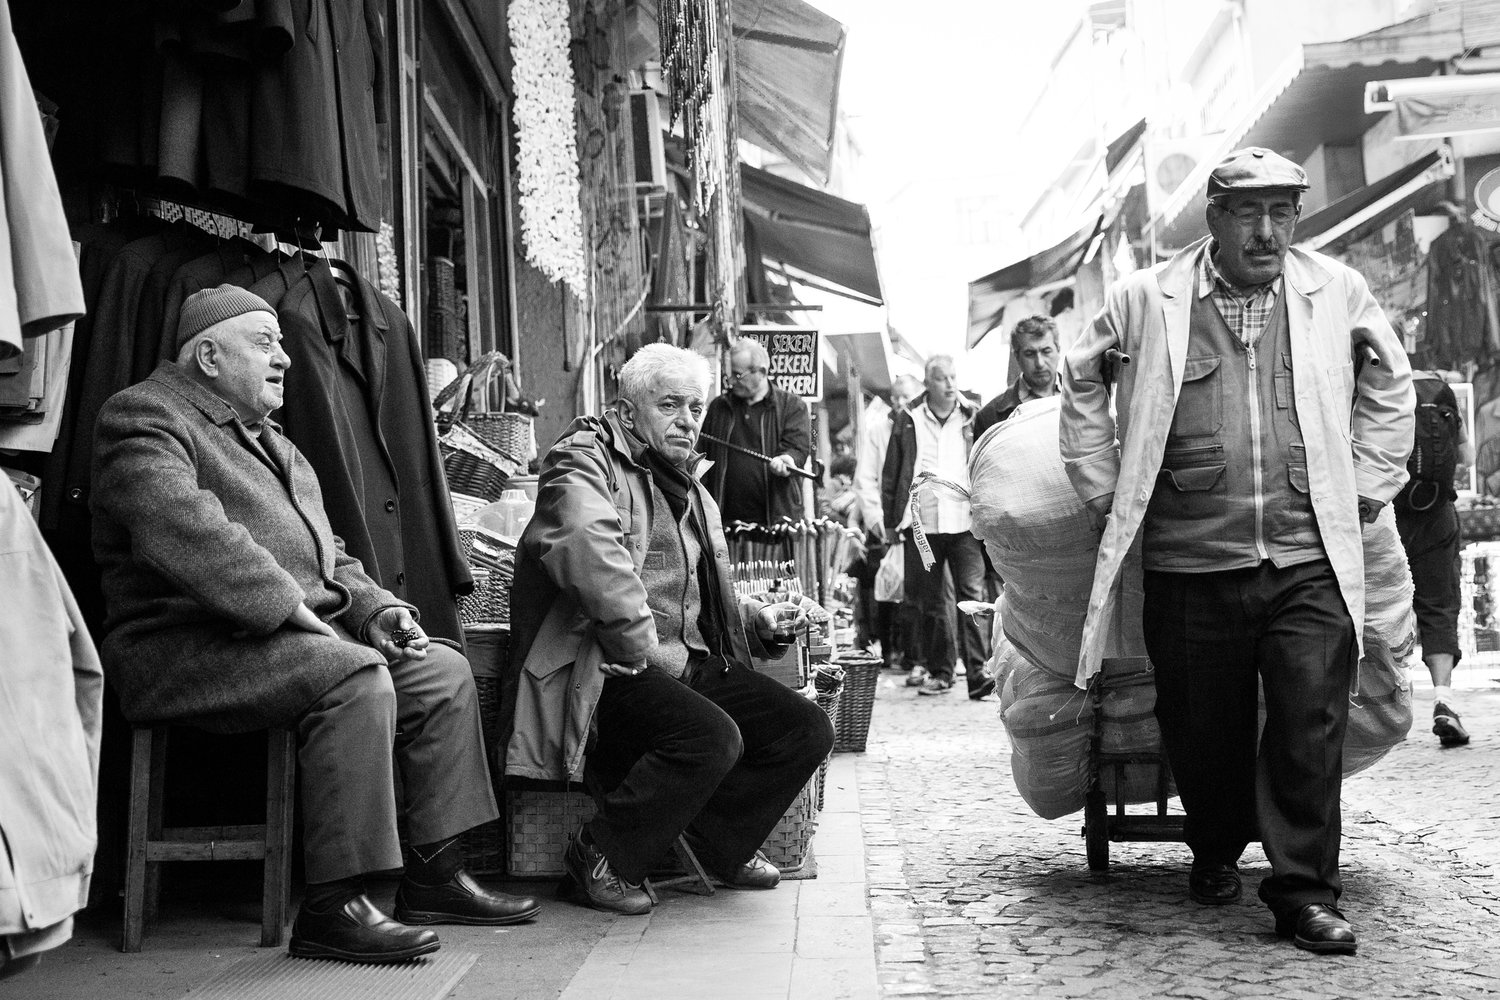 istanbul_hasircilar-cad-market-street-area-1017-two-old-men-look-on.jpg